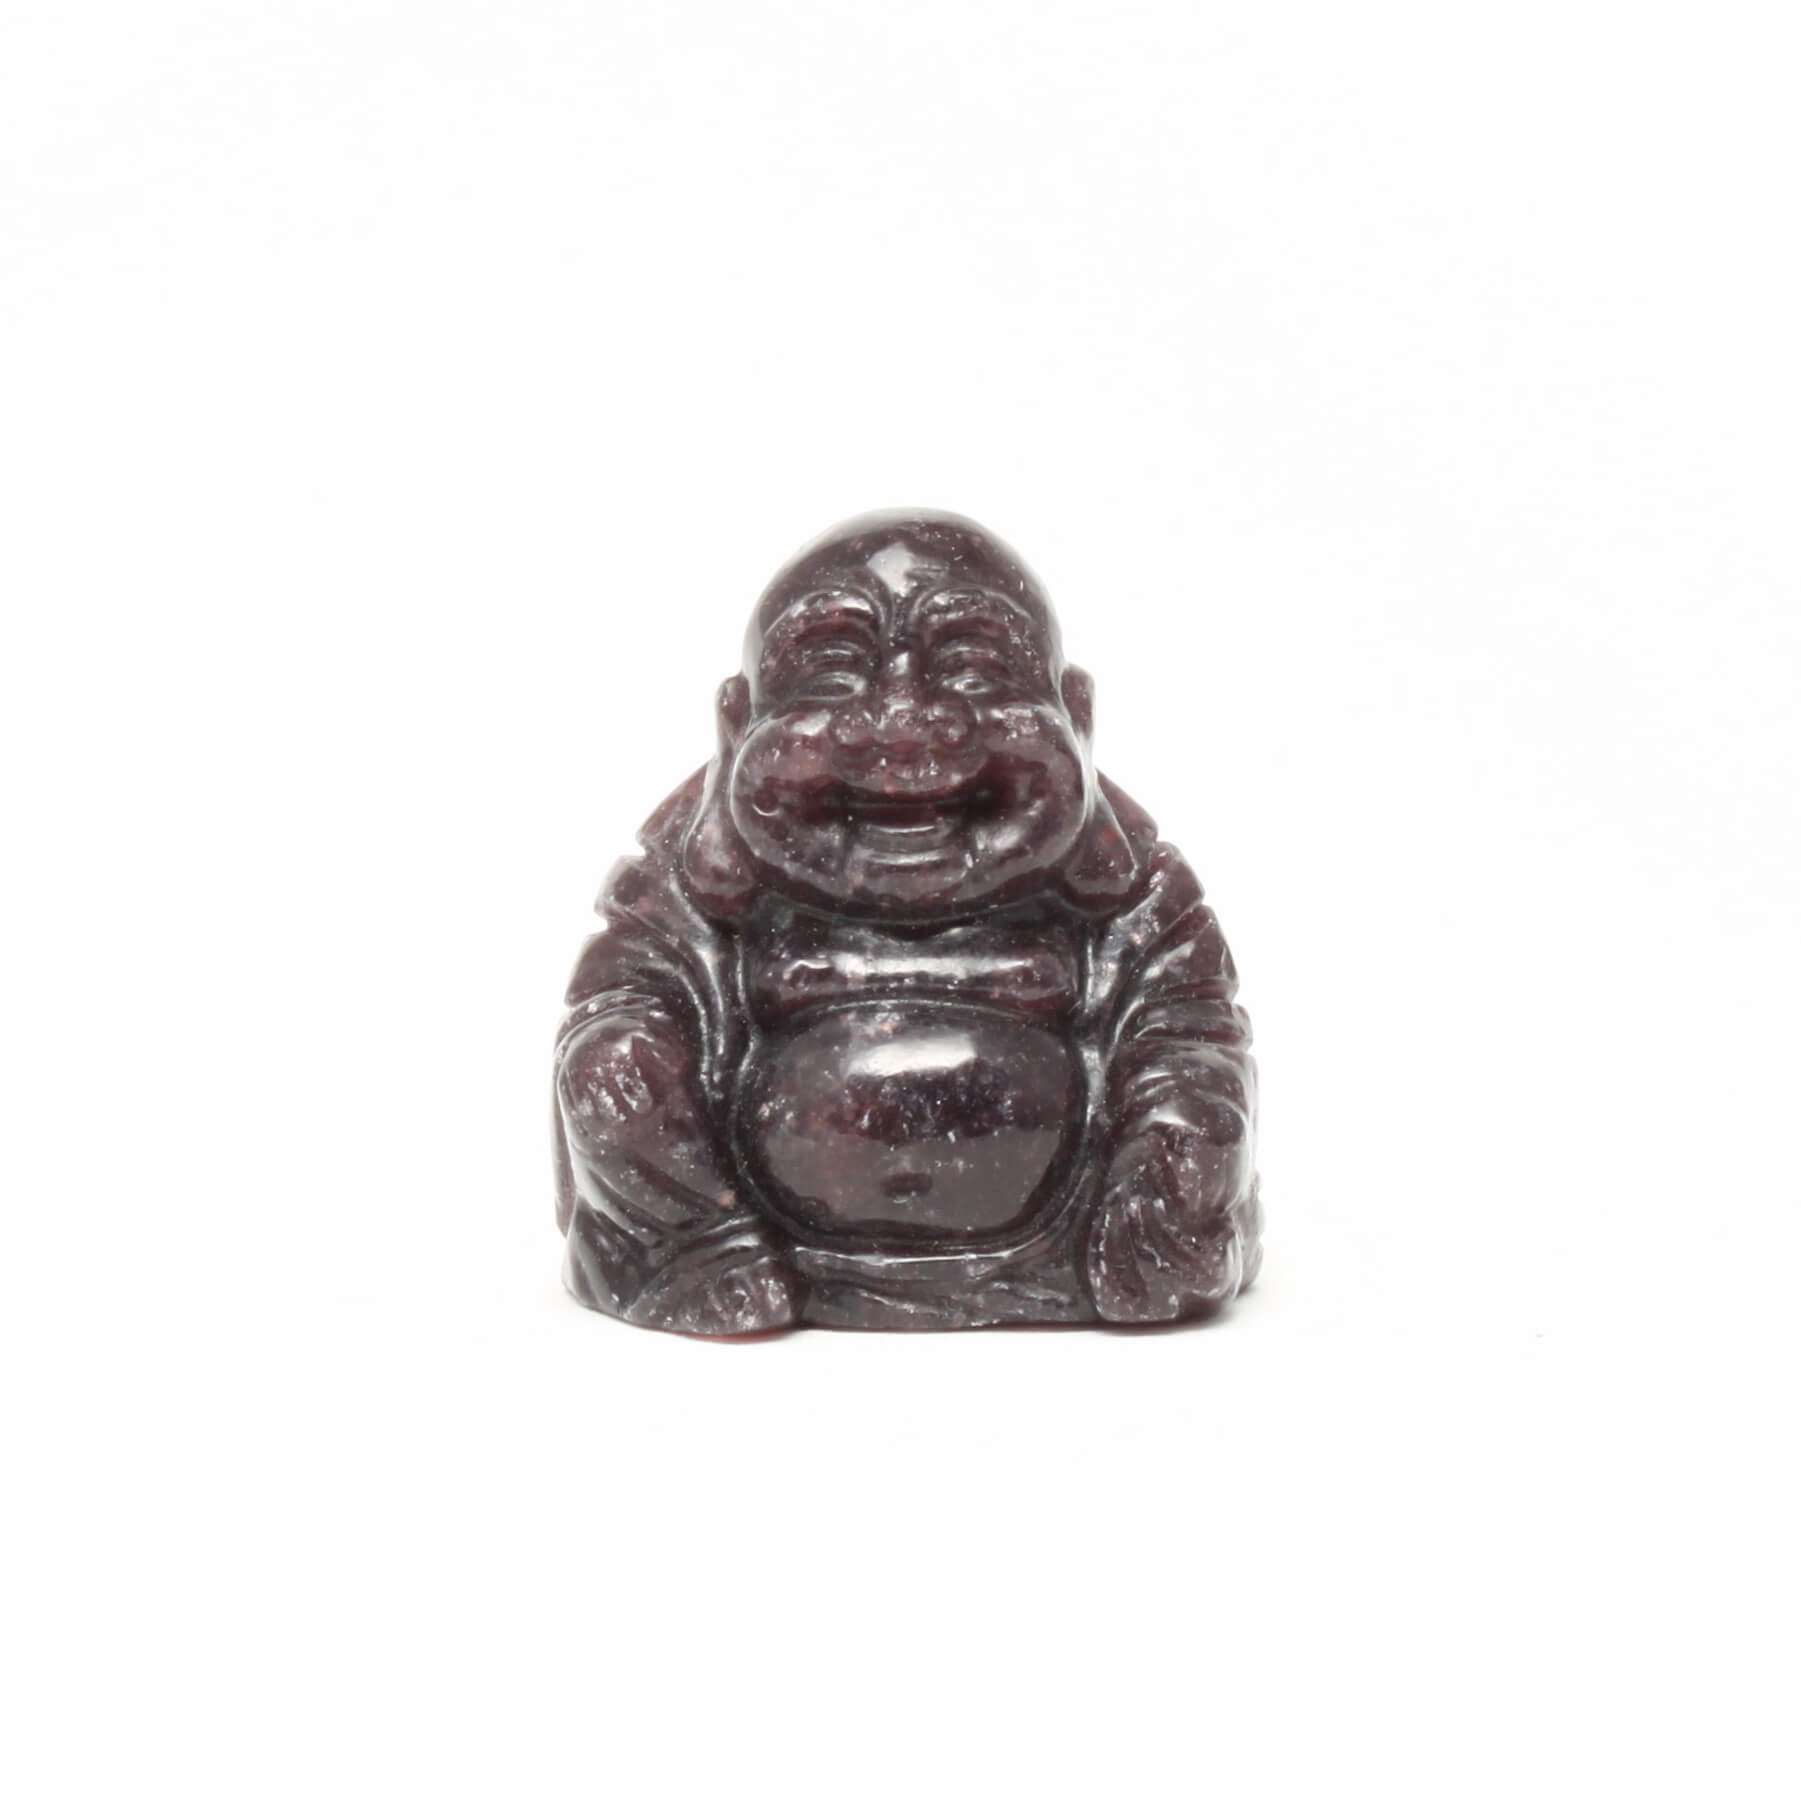 Fin lille Lepidolit Buddha